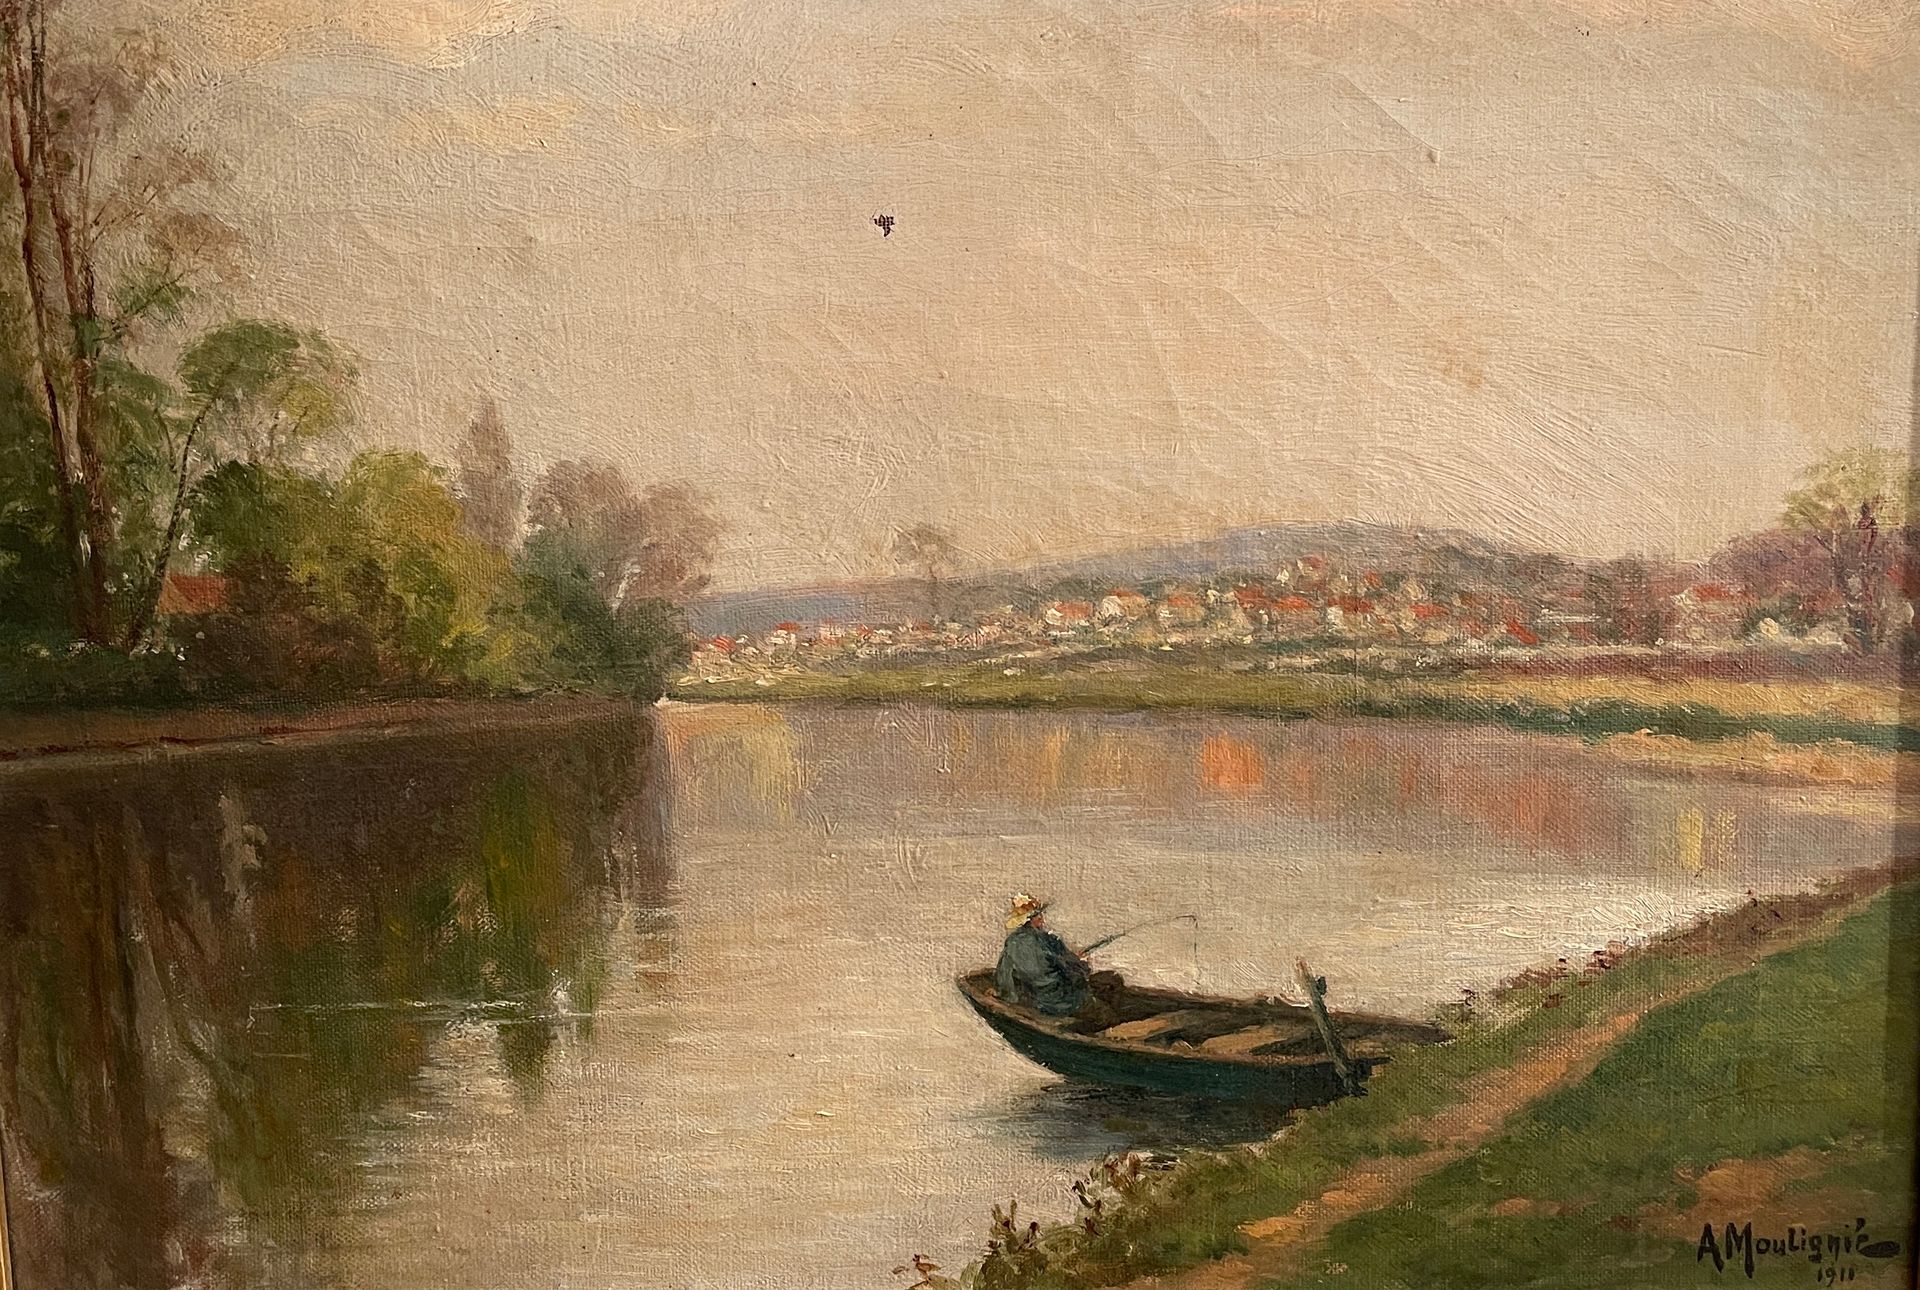 Null A.慕利尼耶

塞纳河的边缘

布面油画，右下方有签名，日期为1911年。

32 x 46 厘米